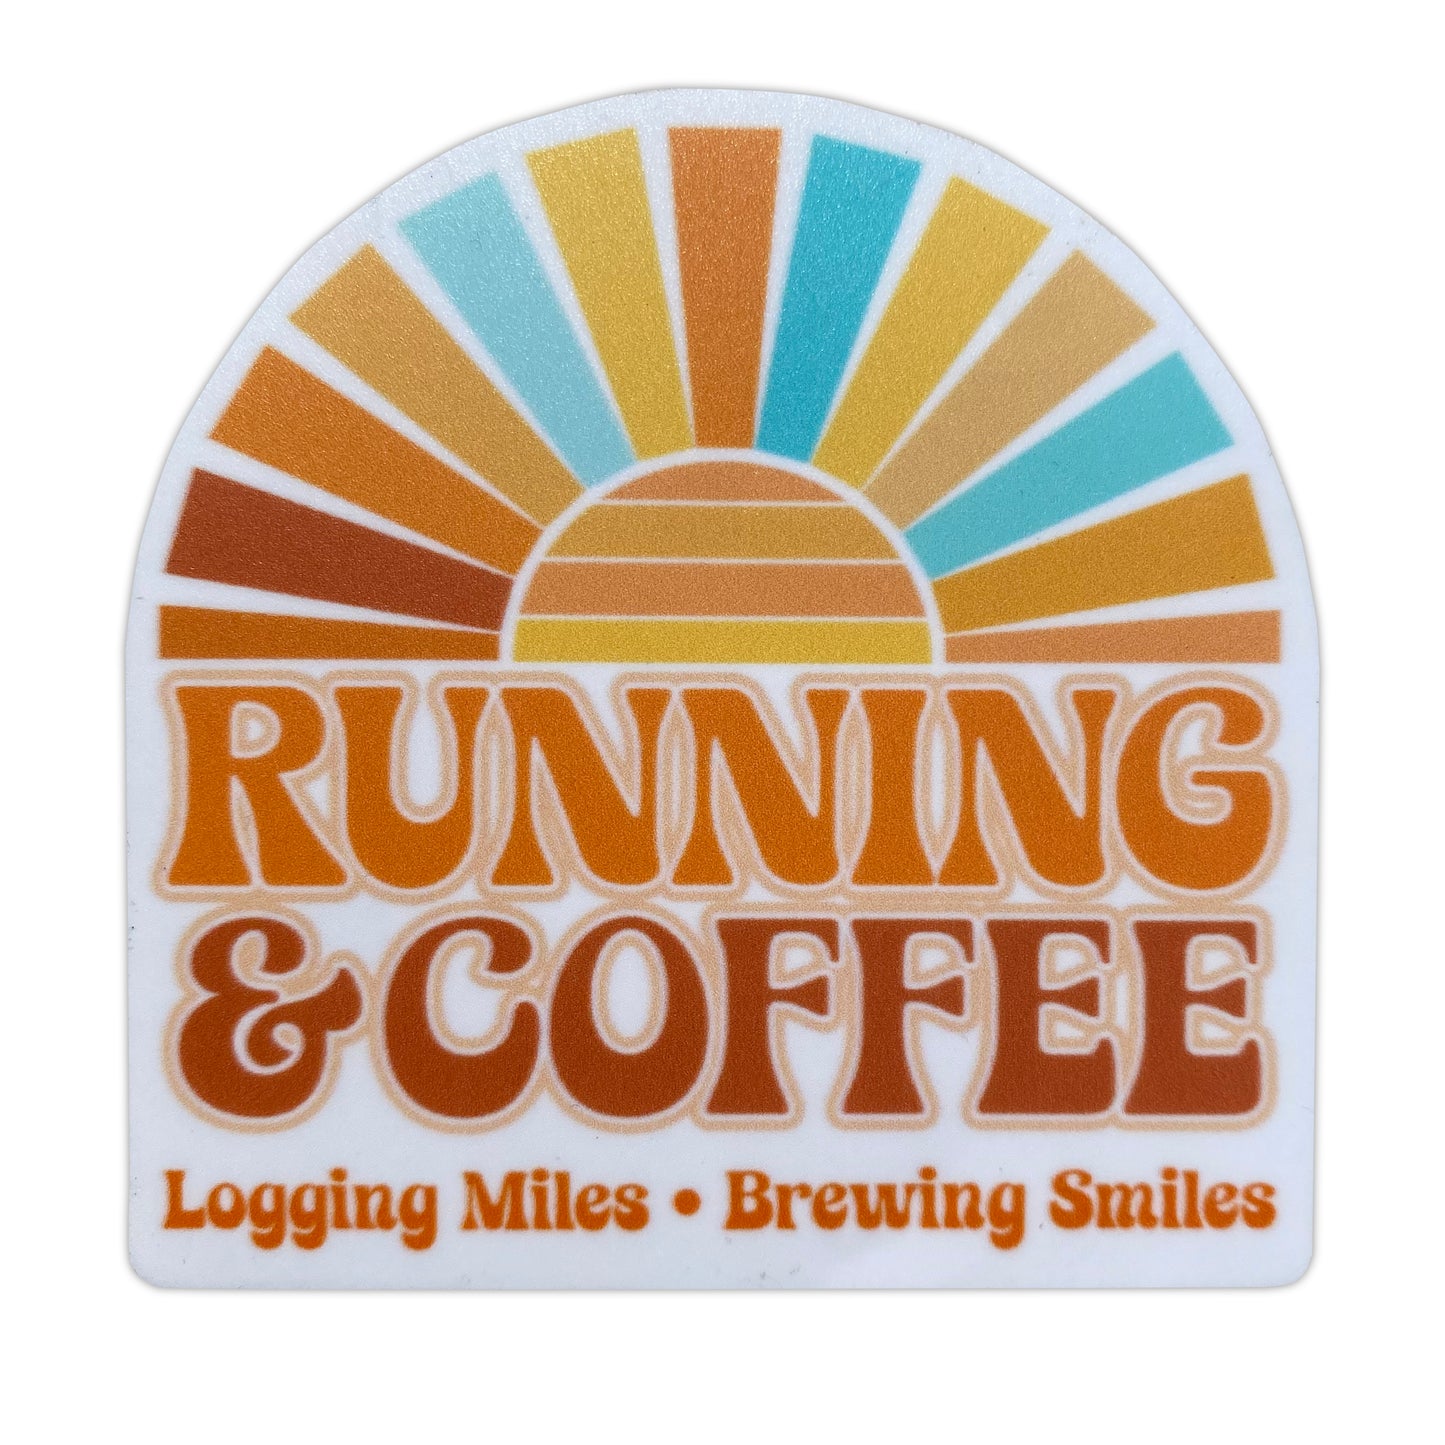 Running & Coffee Logging Miles Brewing Smiles - Die Cut Vinyl Sticker